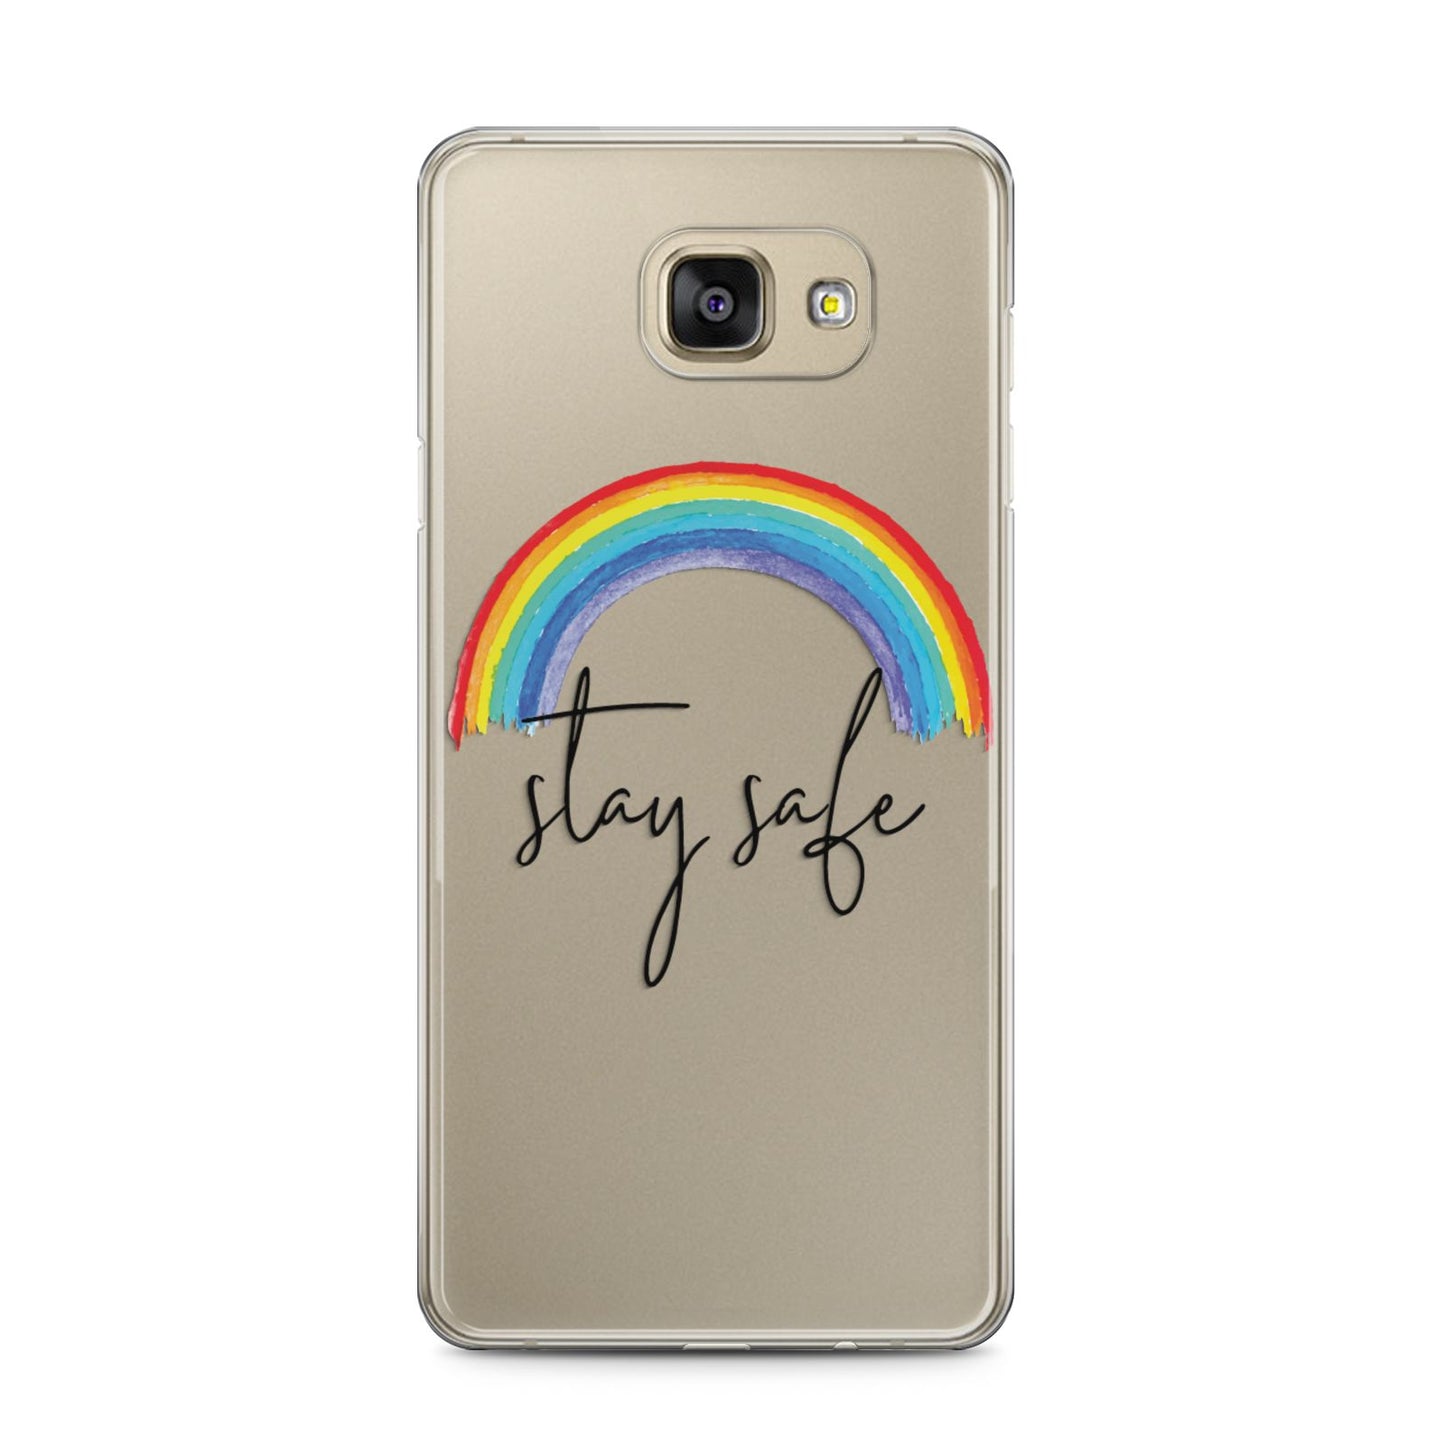 Stay Safe Rainbow Samsung Galaxy A5 2016 Case on gold phone